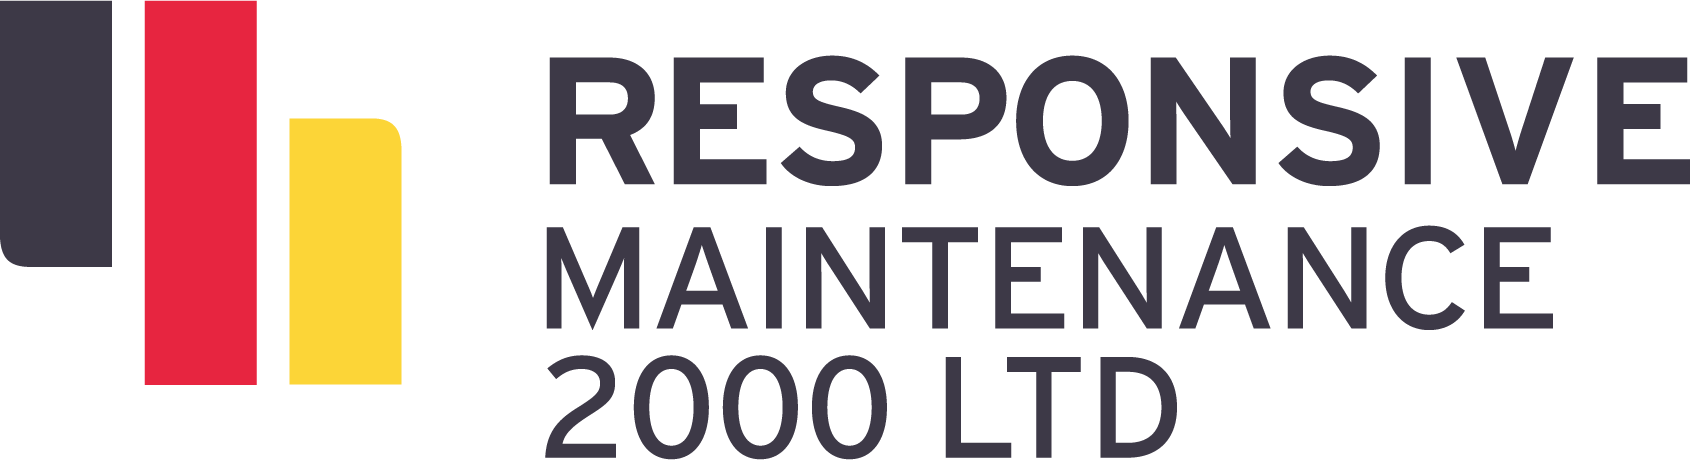 Responsive Maintenance 2000 Ltd